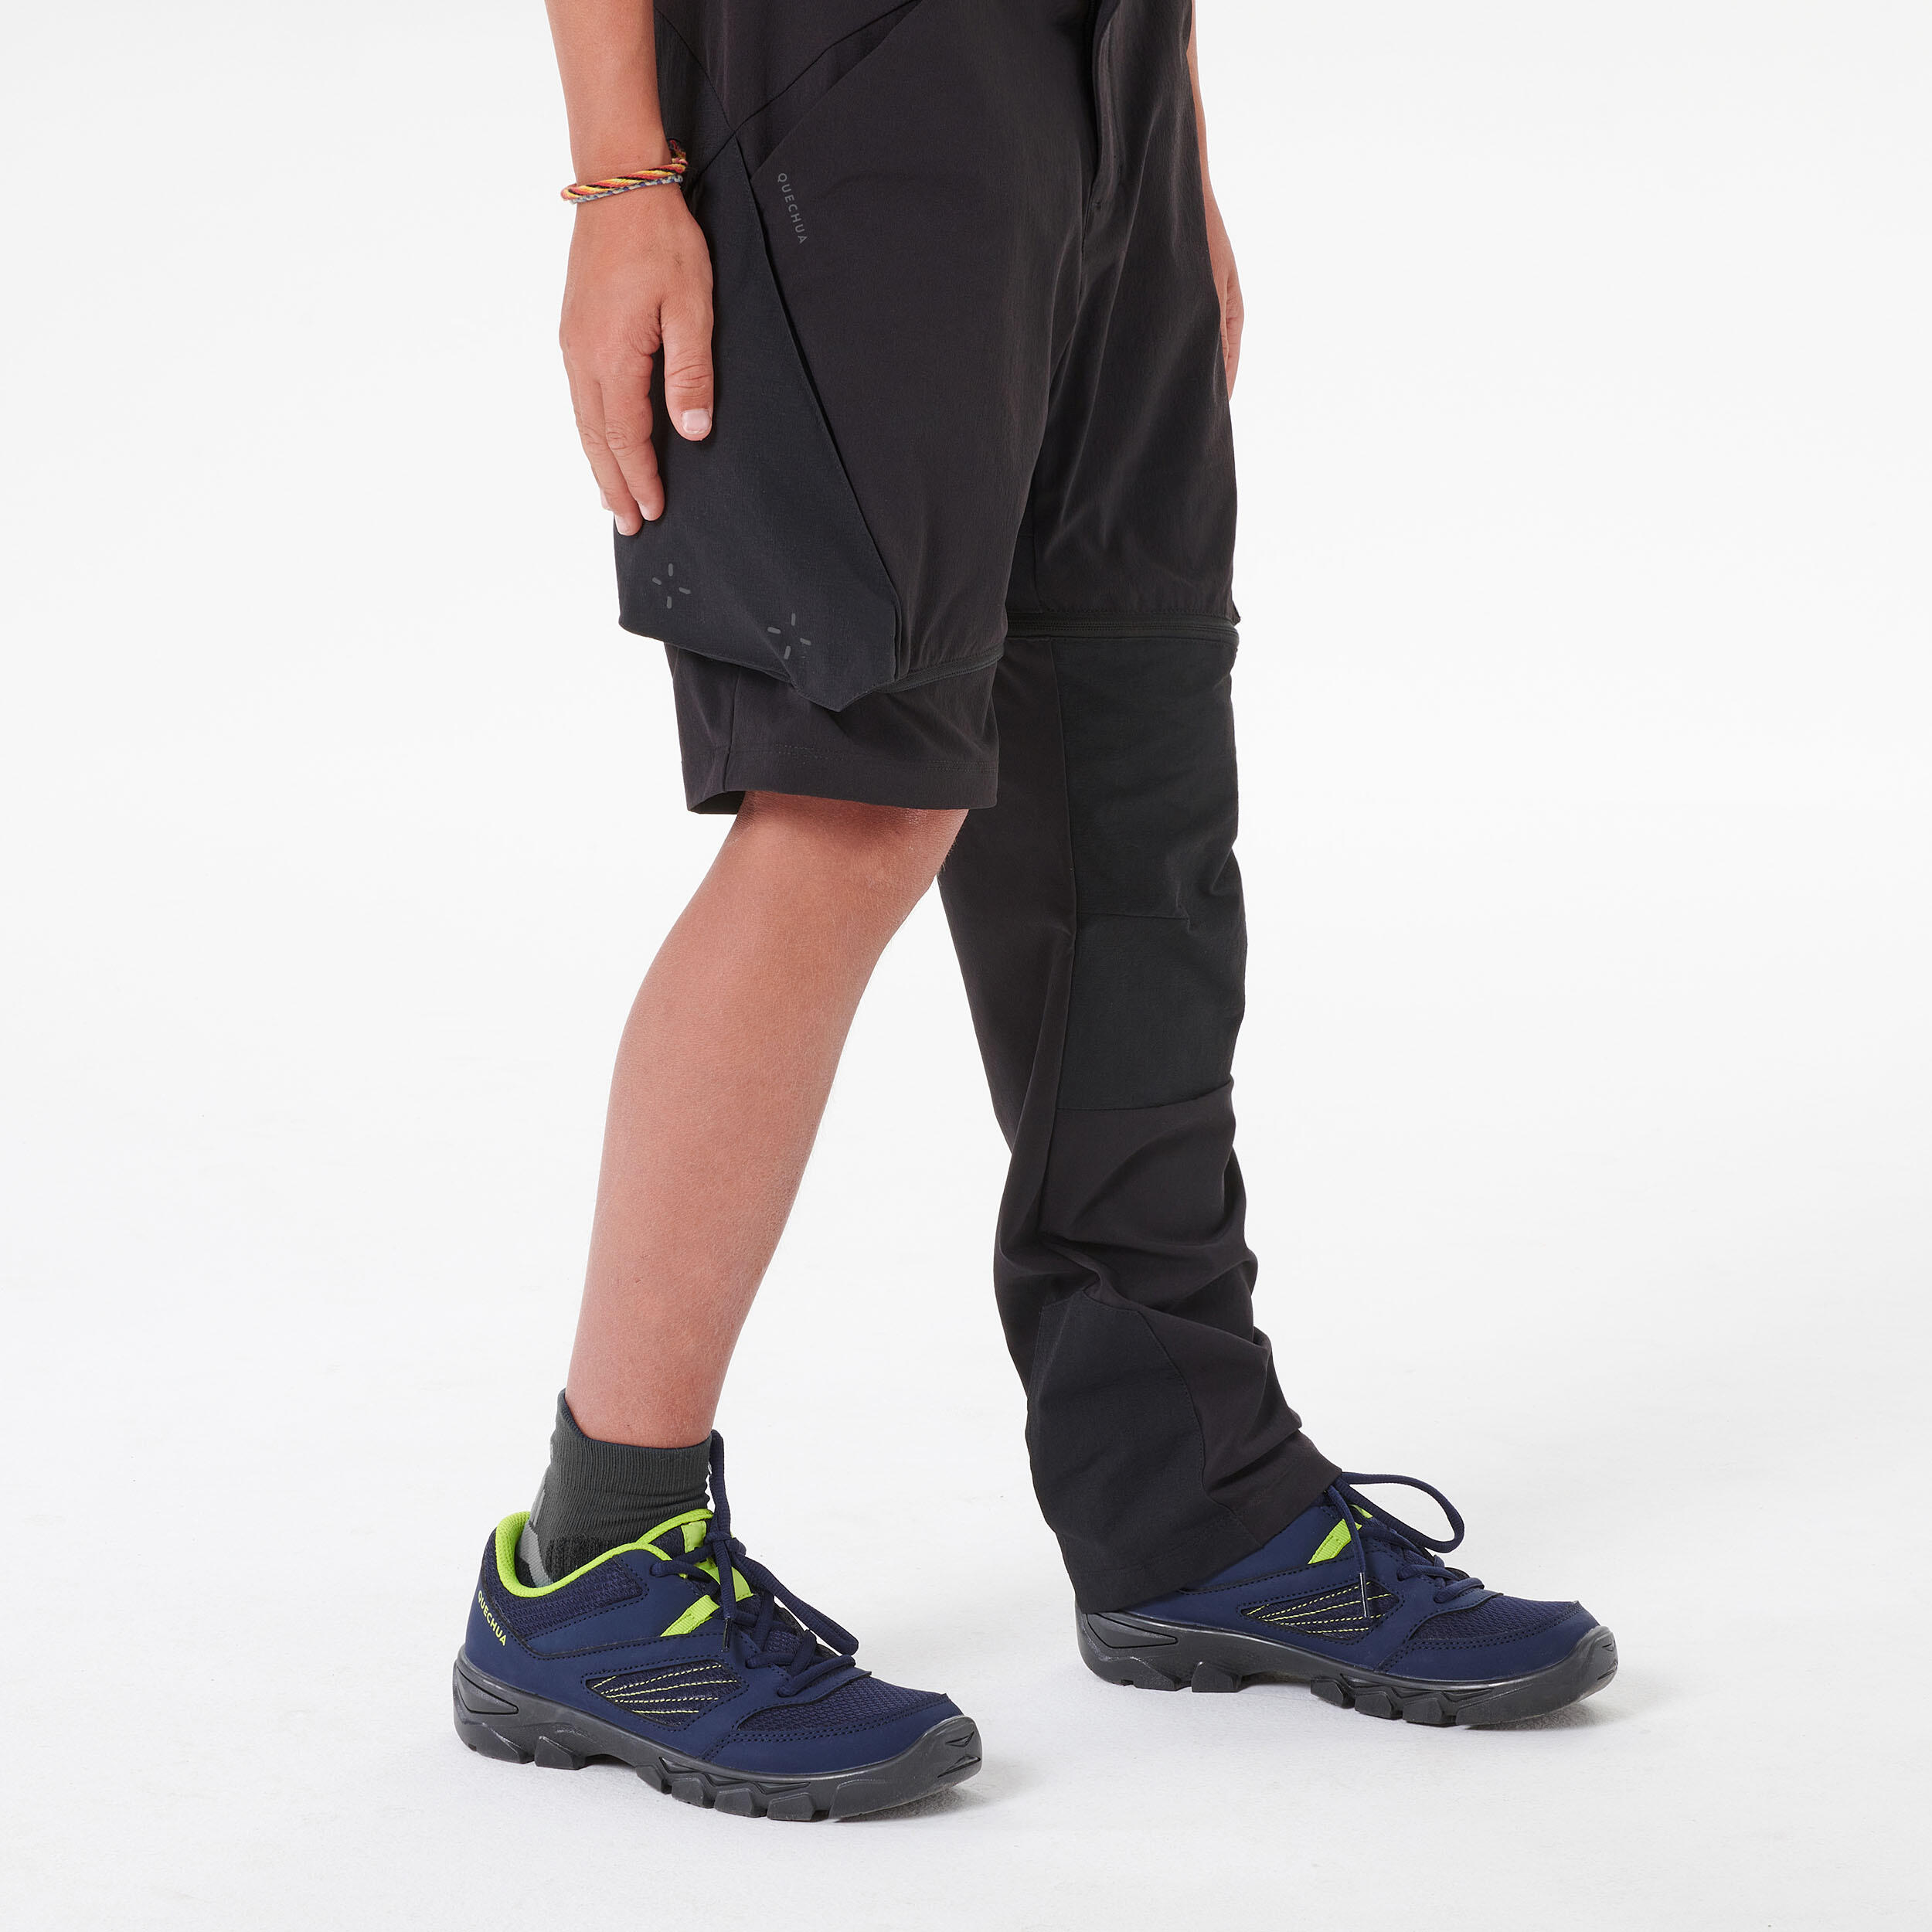 Kids’ Modular Hiking Trousers MH500 ONEZIP Aged 7-15 - Black 10/17